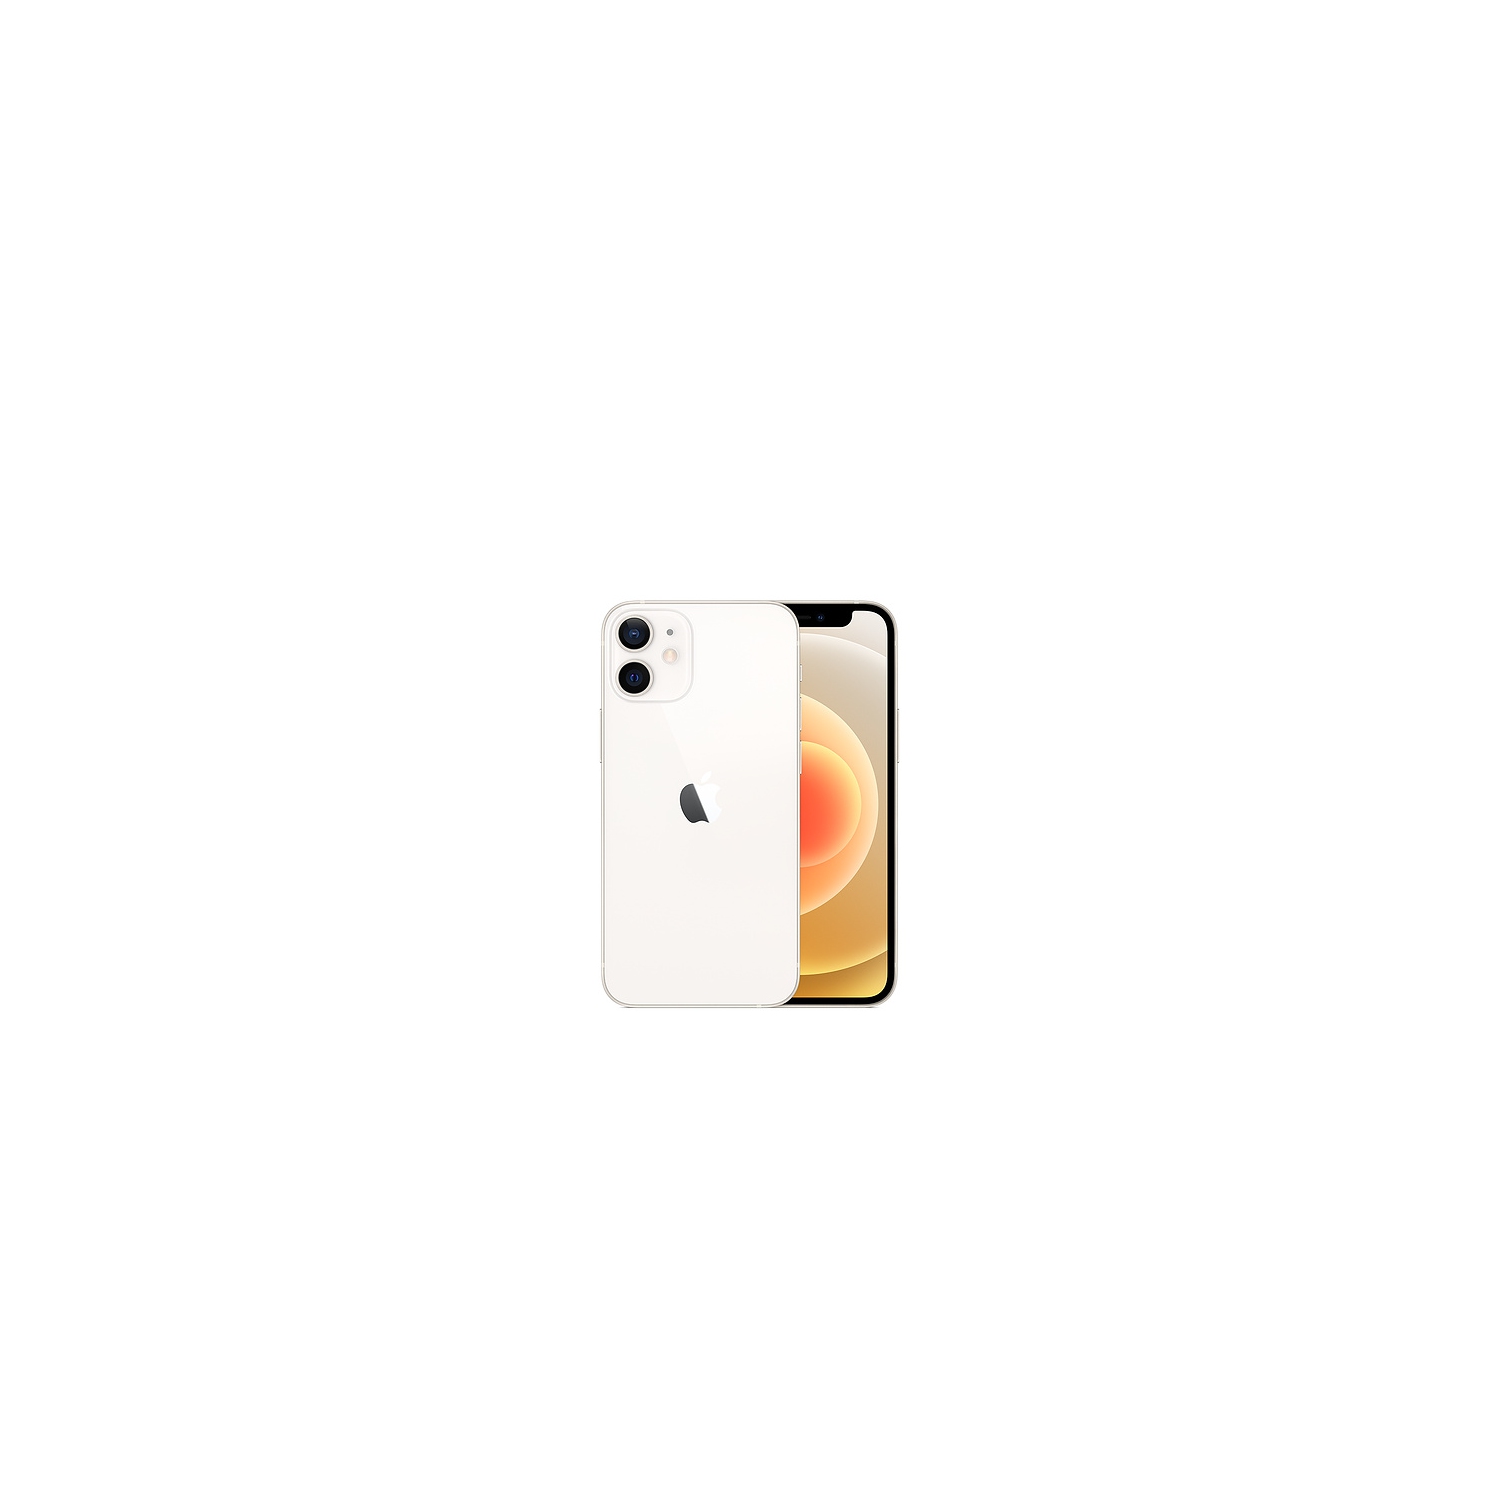 Apple iPhone 12 Mini 64GB Smartphone - White - Unlocked - New